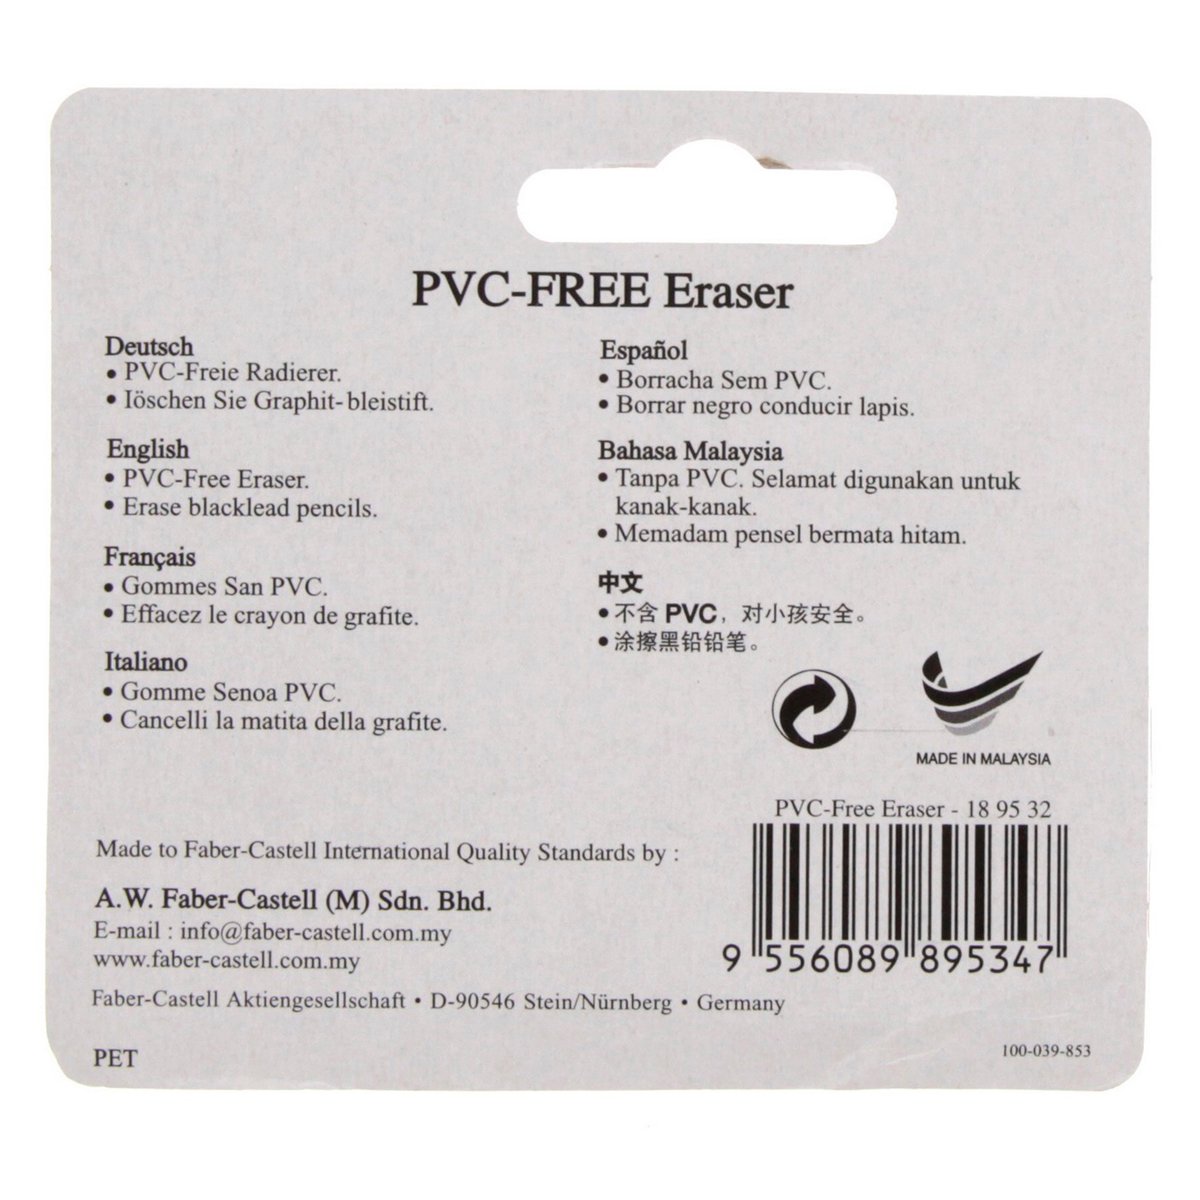 Faber-Castell - Eraser PVC-Free 3 Pieces